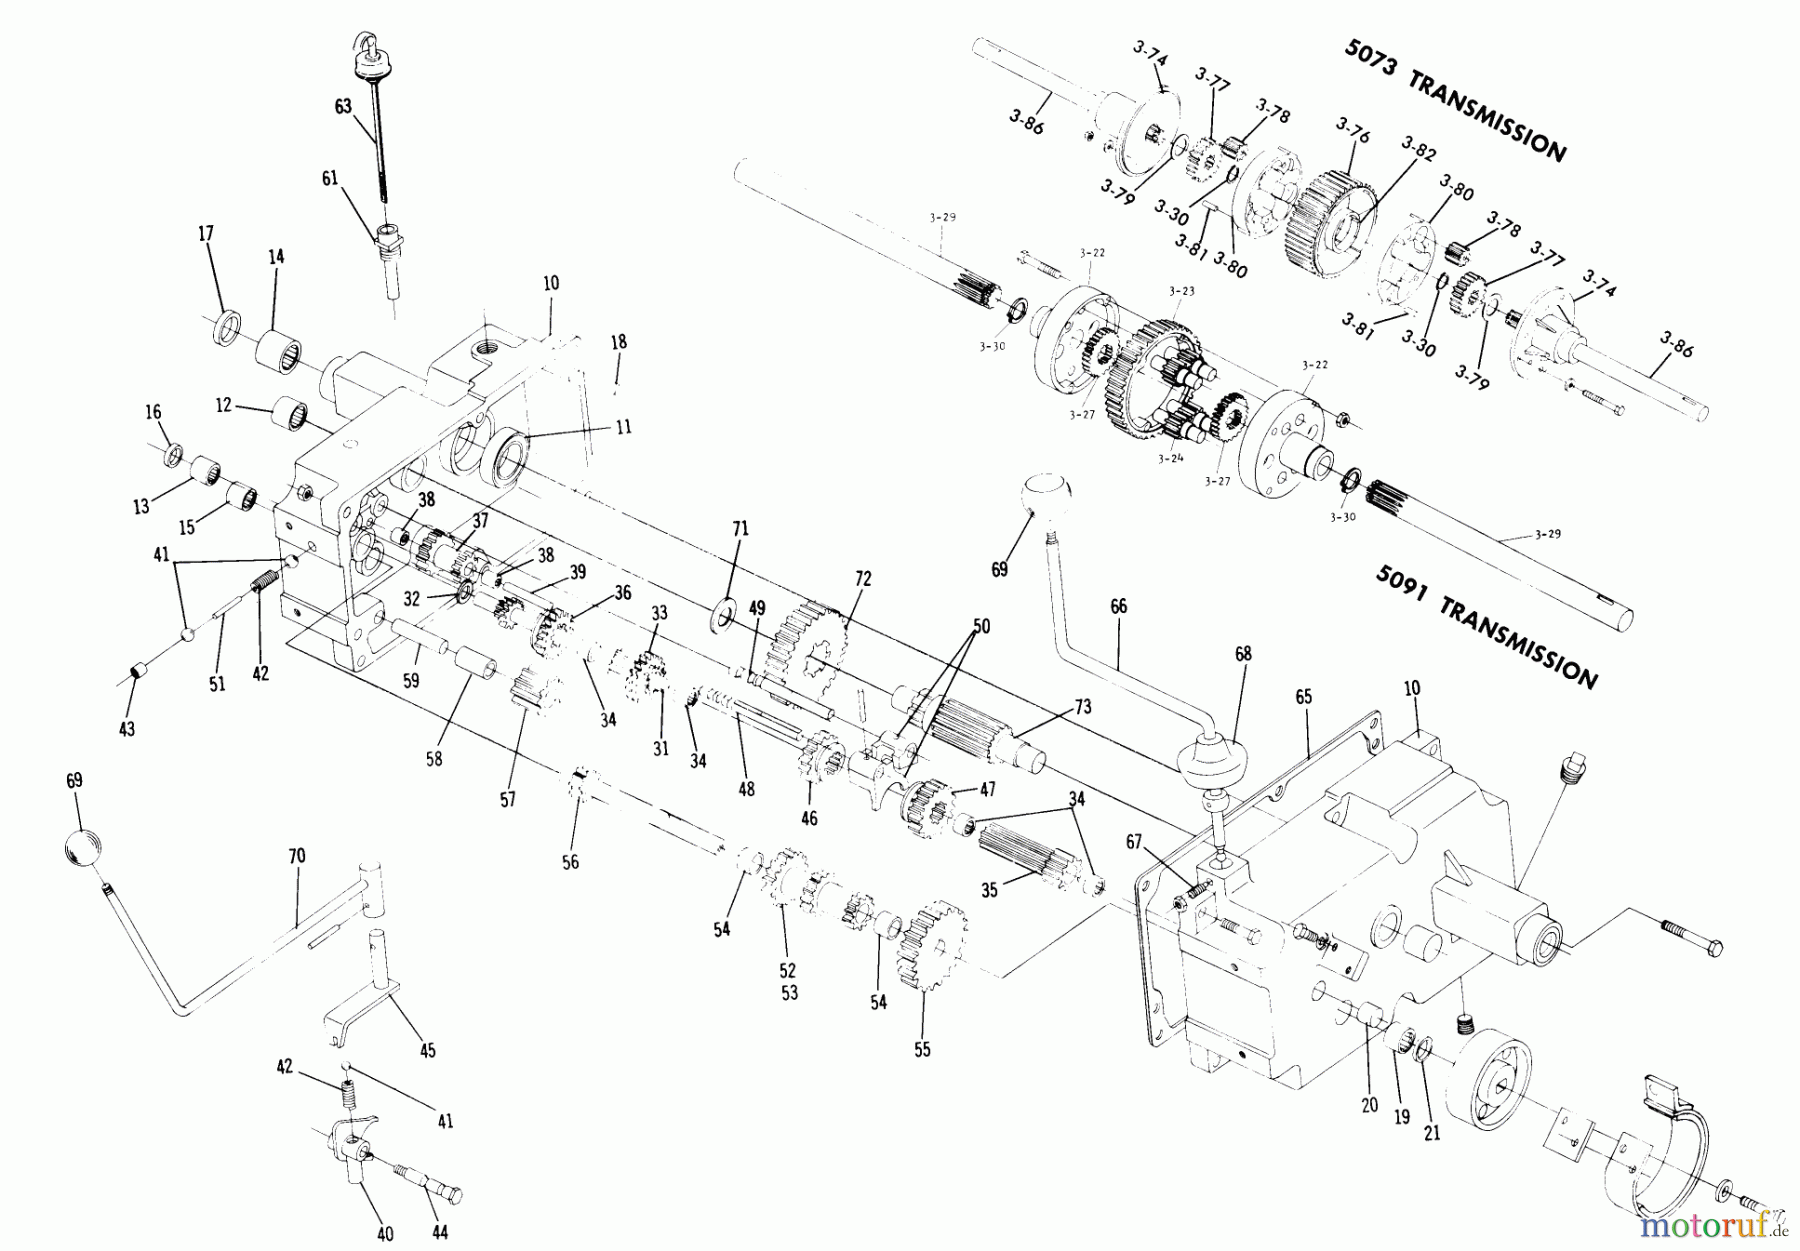  Toro Neu Mowers, Lawn & Garden Tractor Seite 1 1-0353 (C-120) - Toro C-120 8-Speed Tractor, 1974 TRANSMISSION 8-SPEED